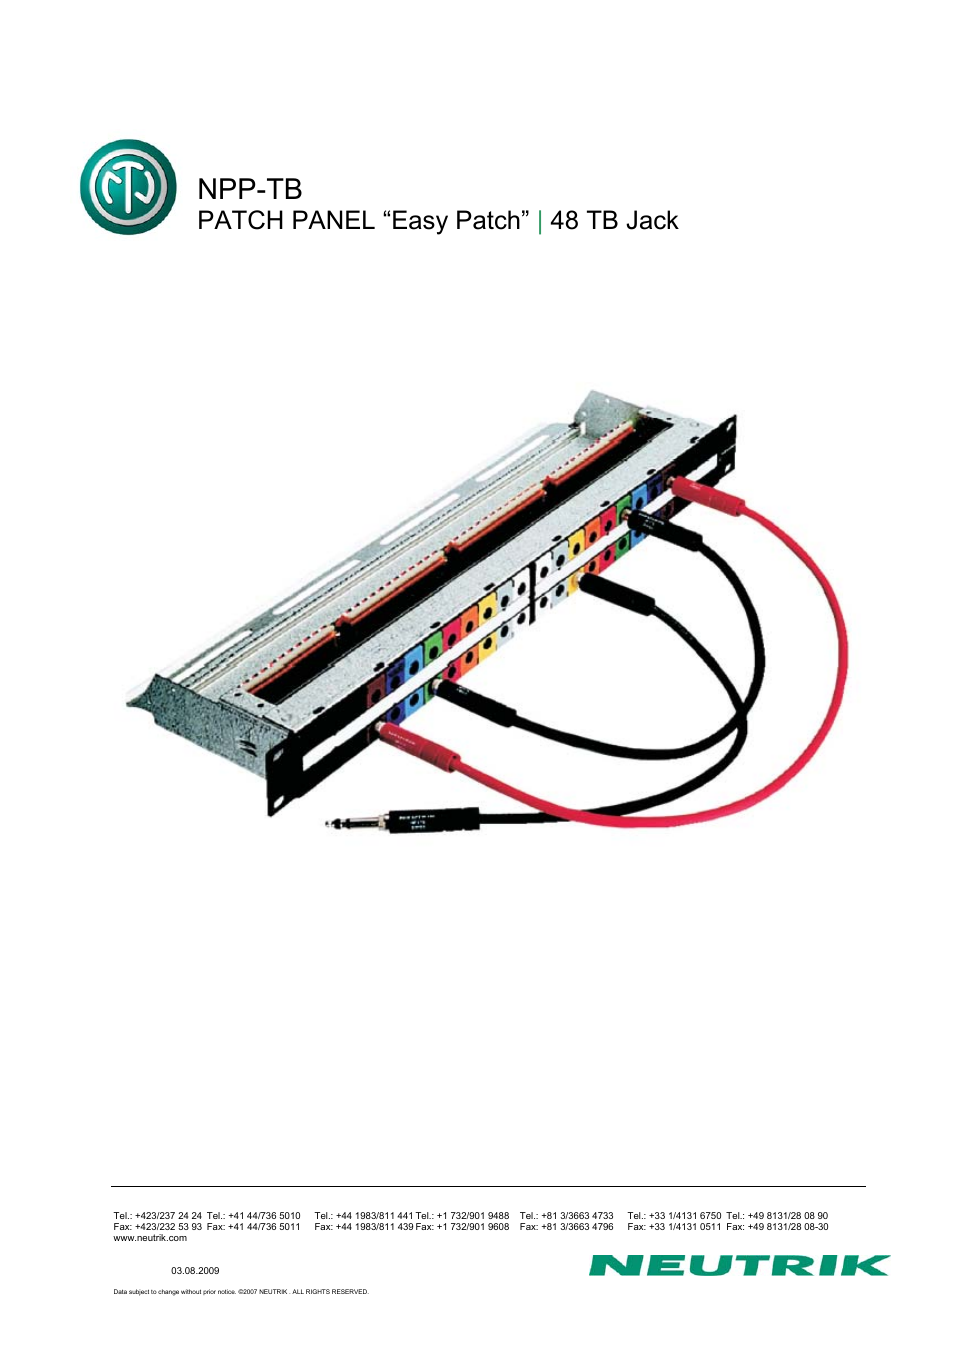 Neutrik NPP-TB PATCH PANEL “Easy Patch” | 48 TB Jack User Manual | 11 pages